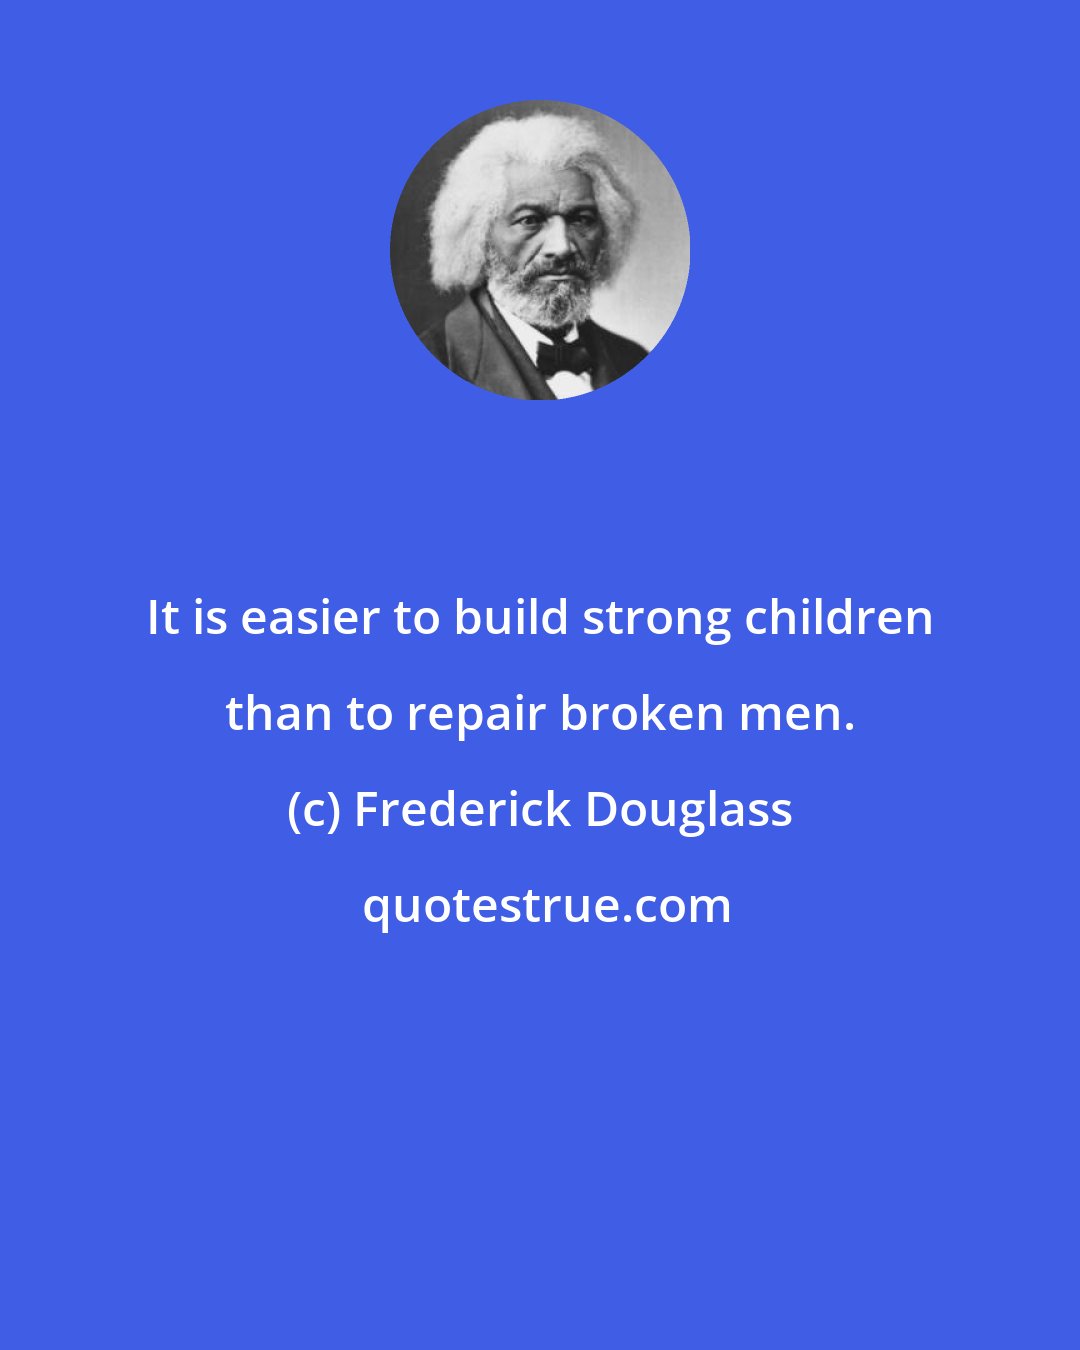 Frederick Douglass: It is easier to build strong children than to repair broken men.